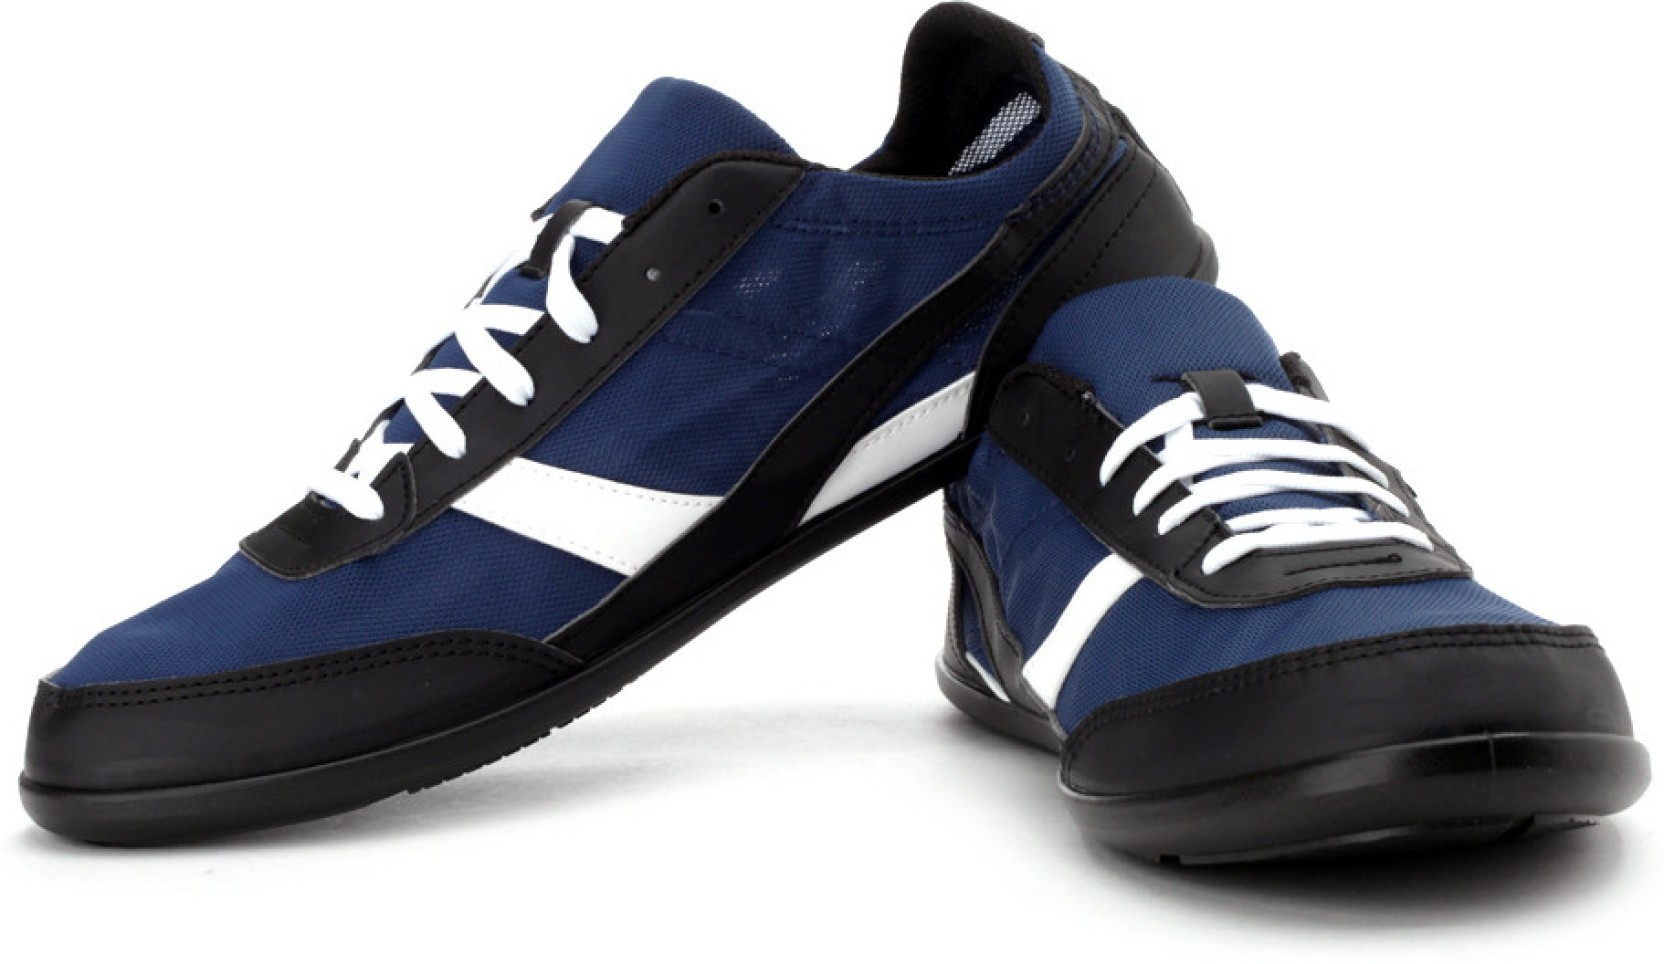 NewFeel Walking Shoes - Buy Navy, White, Black Color NewFeel Walking ...